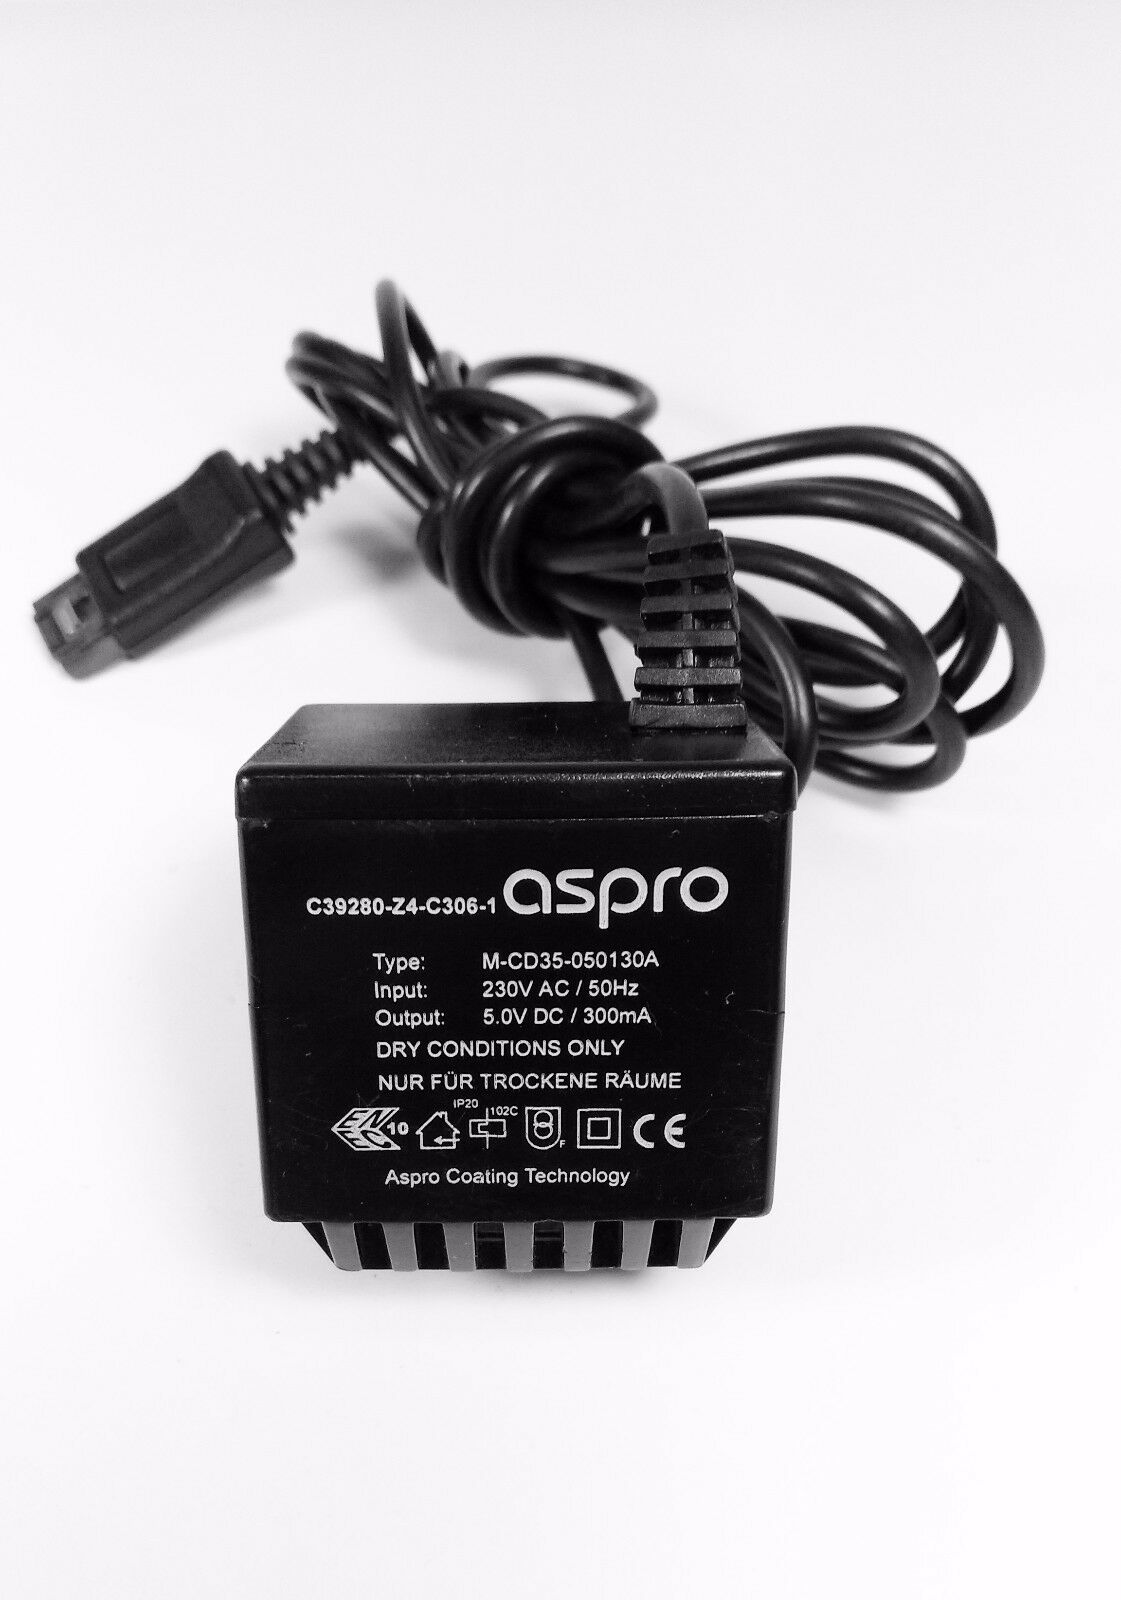 NEW 5V 300mA Aspro C39280-Z4-C306-1 M-CD35-050130A AC/DC Adapter